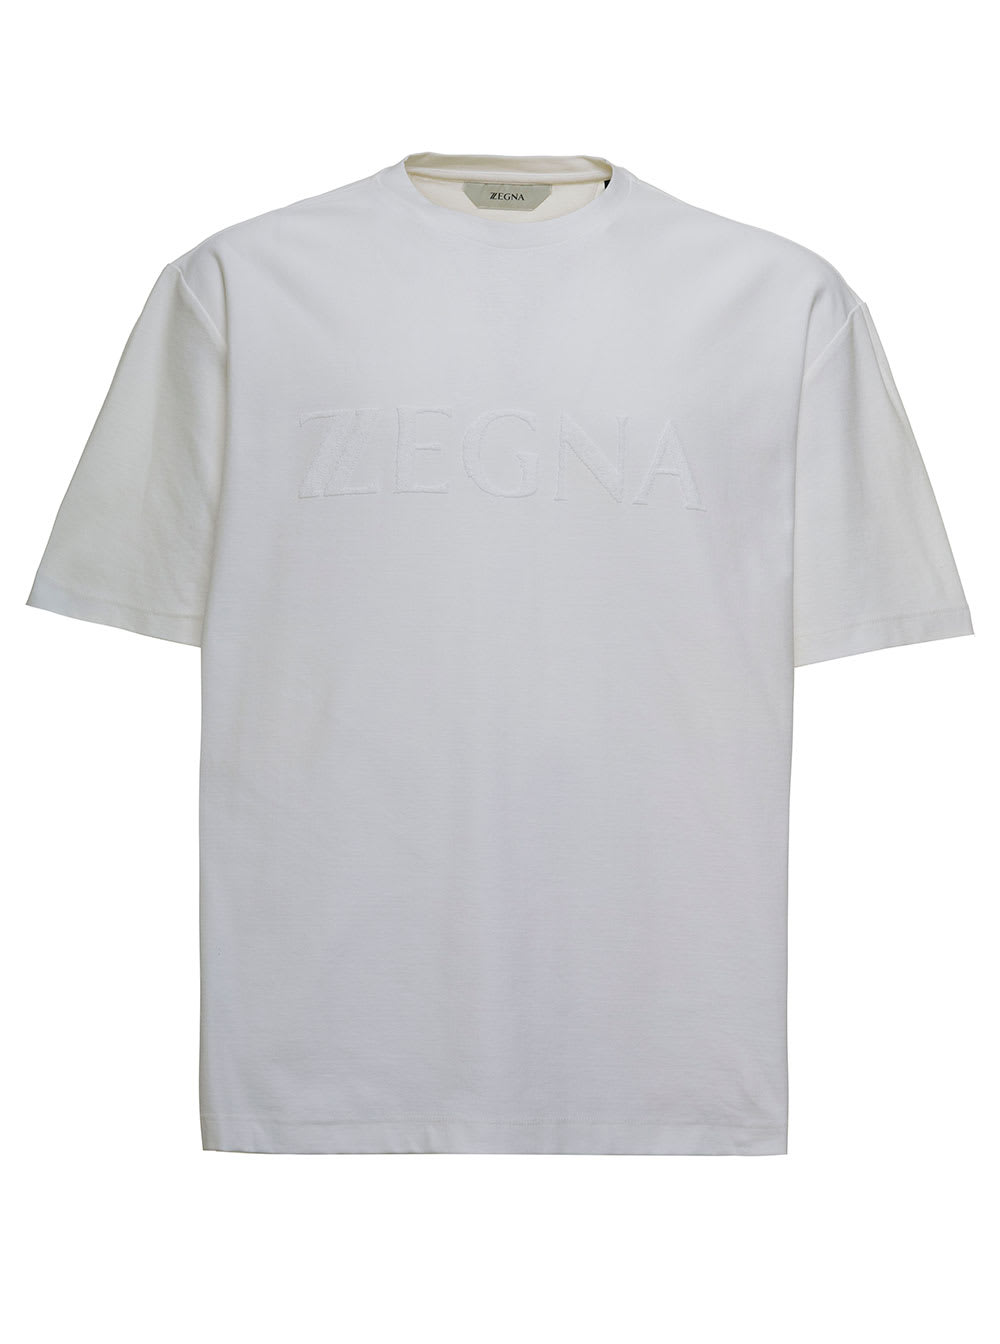 Z Zegna White Cotton Crew Neck T-shirt